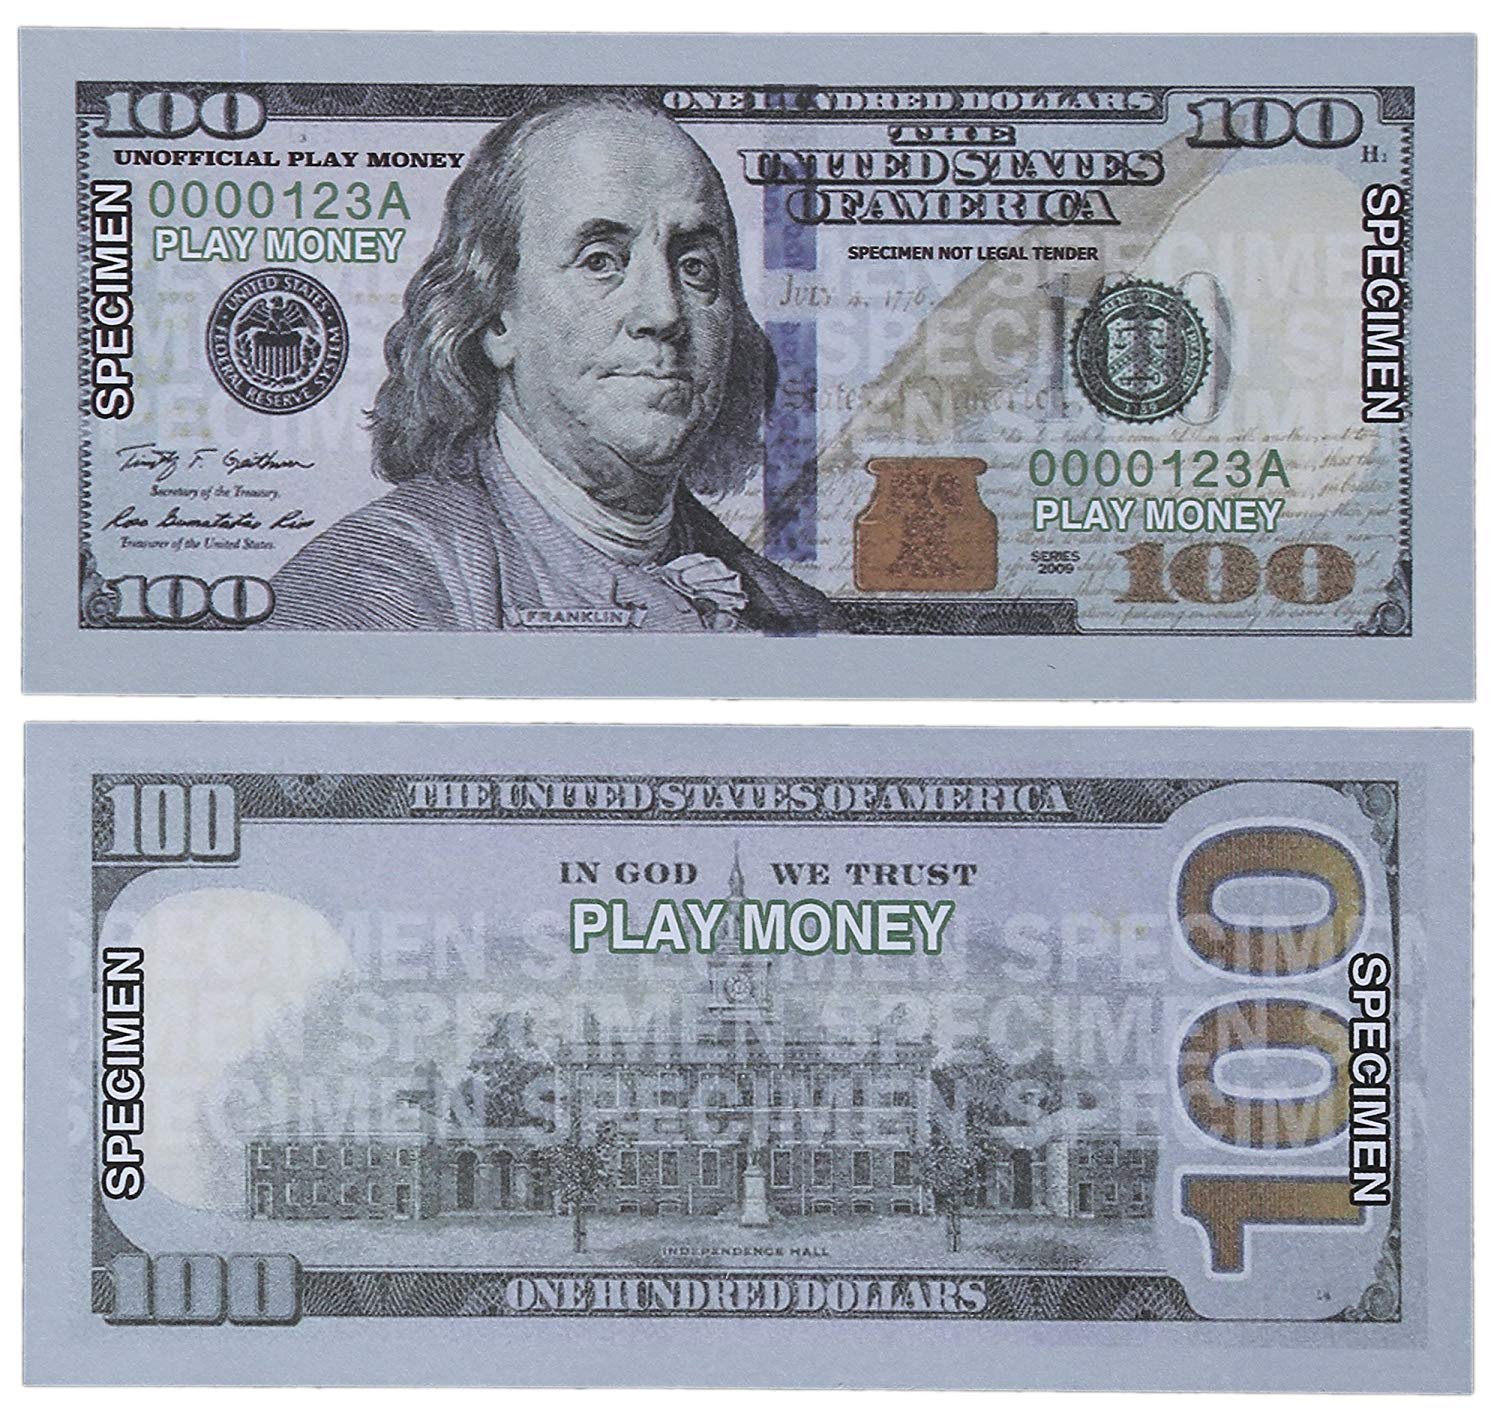 Amazon.com: Paper Playing Money - $100 One Hundred Dollar Bills ...